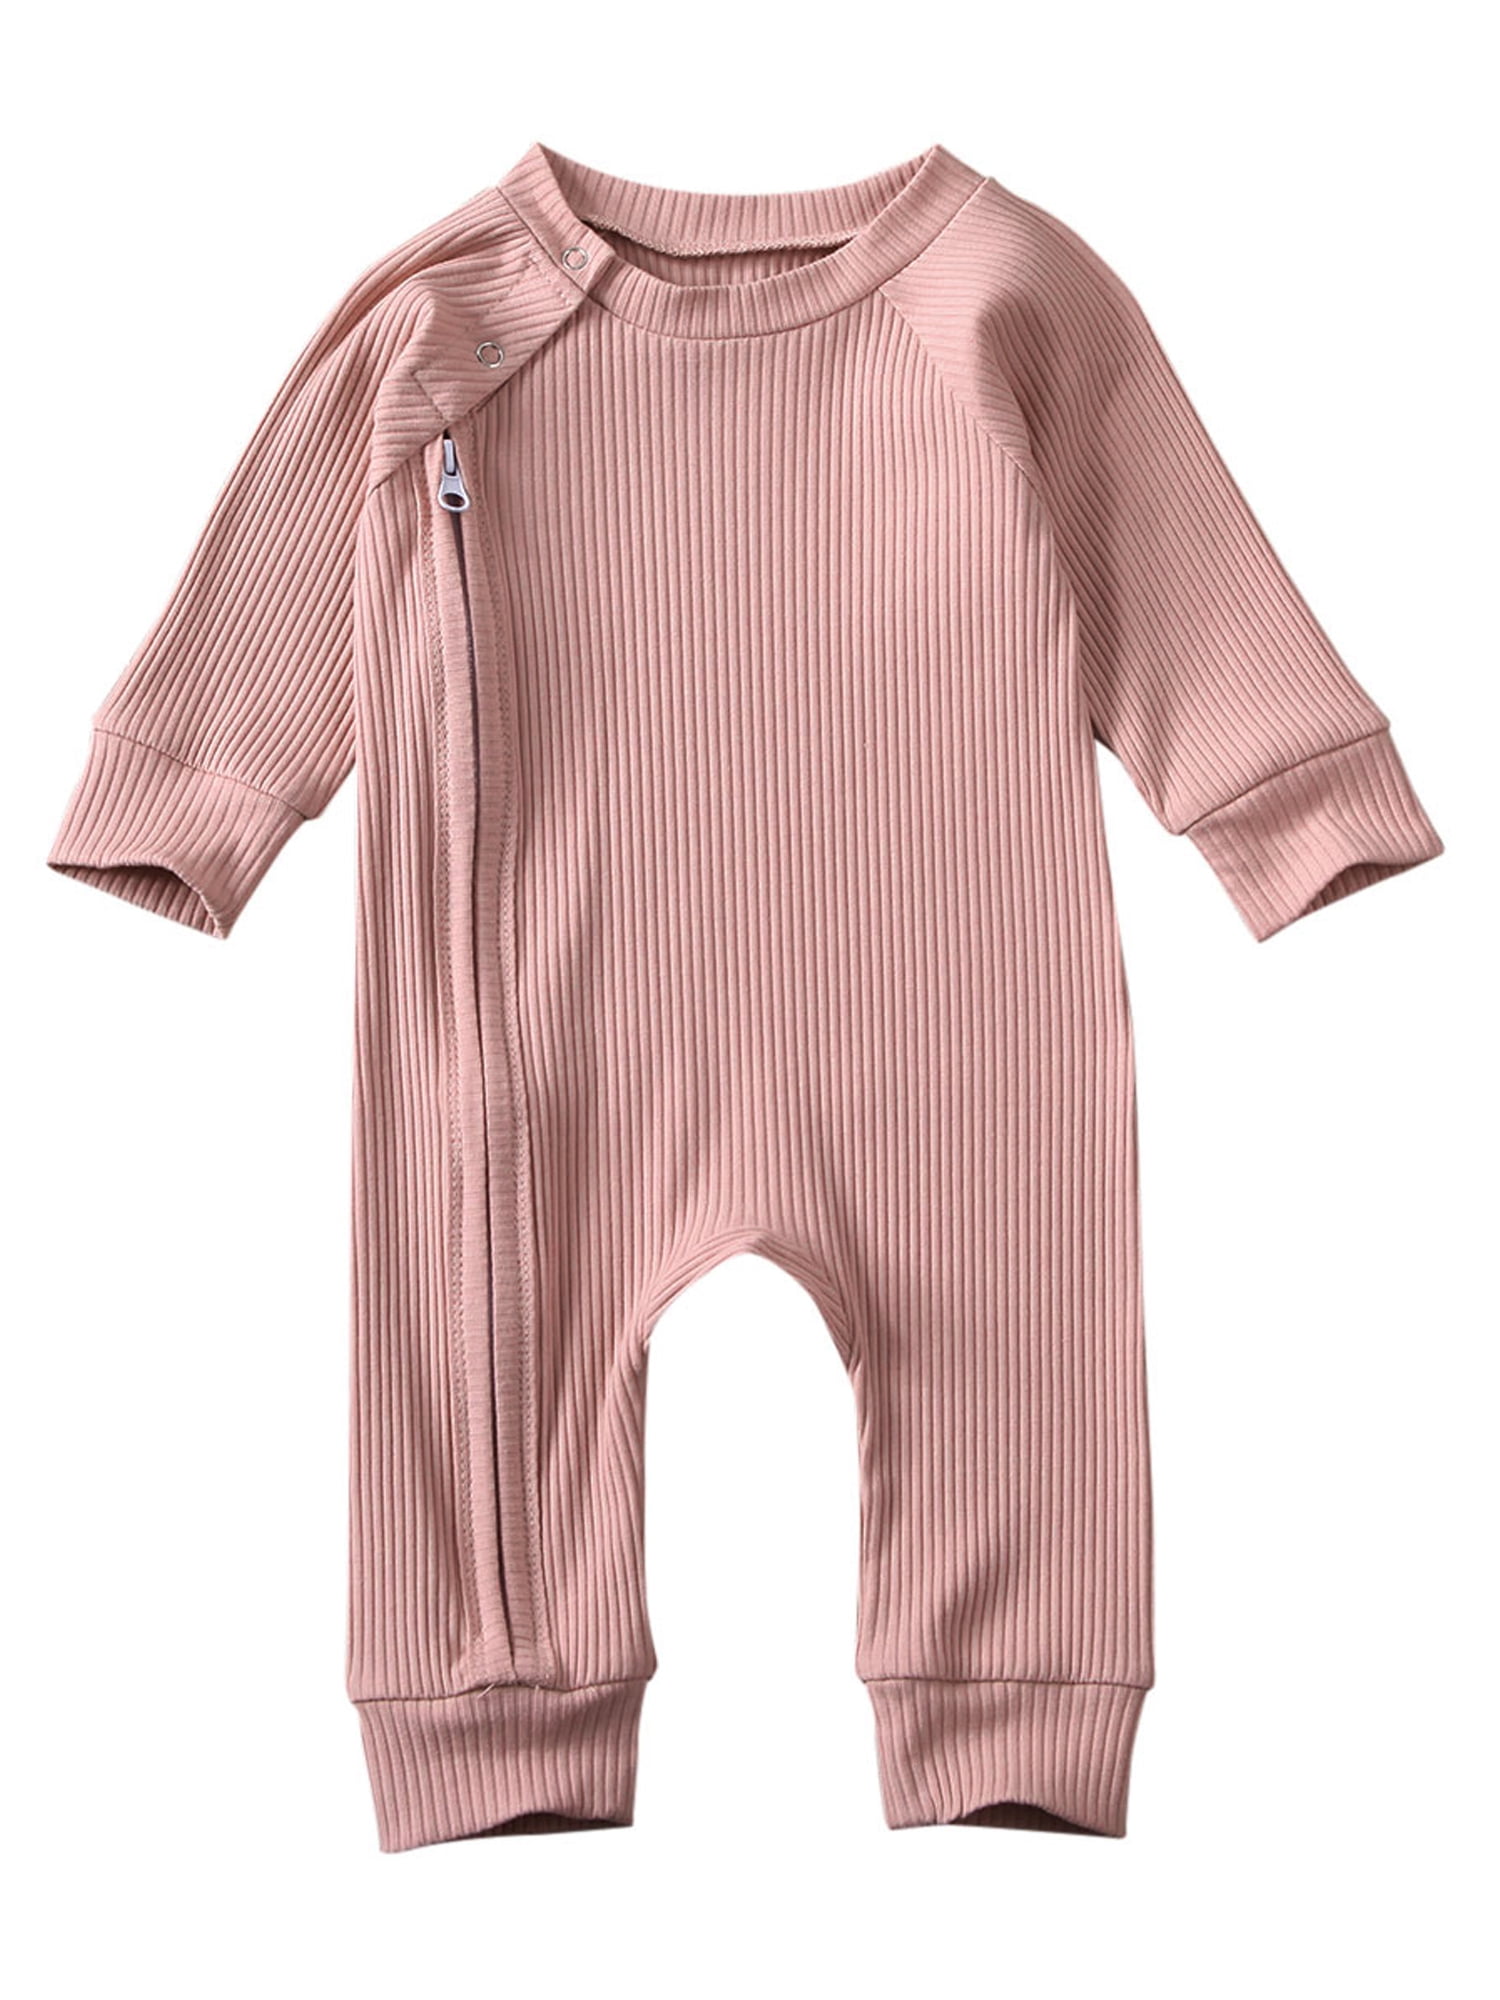 EYIIYE Newborn Infant Baby Girl Boy Knitted Long Sleeve Solid Color Sleeper Sleepwear Nightgown Sleeping Bag with Hat 0-3M 